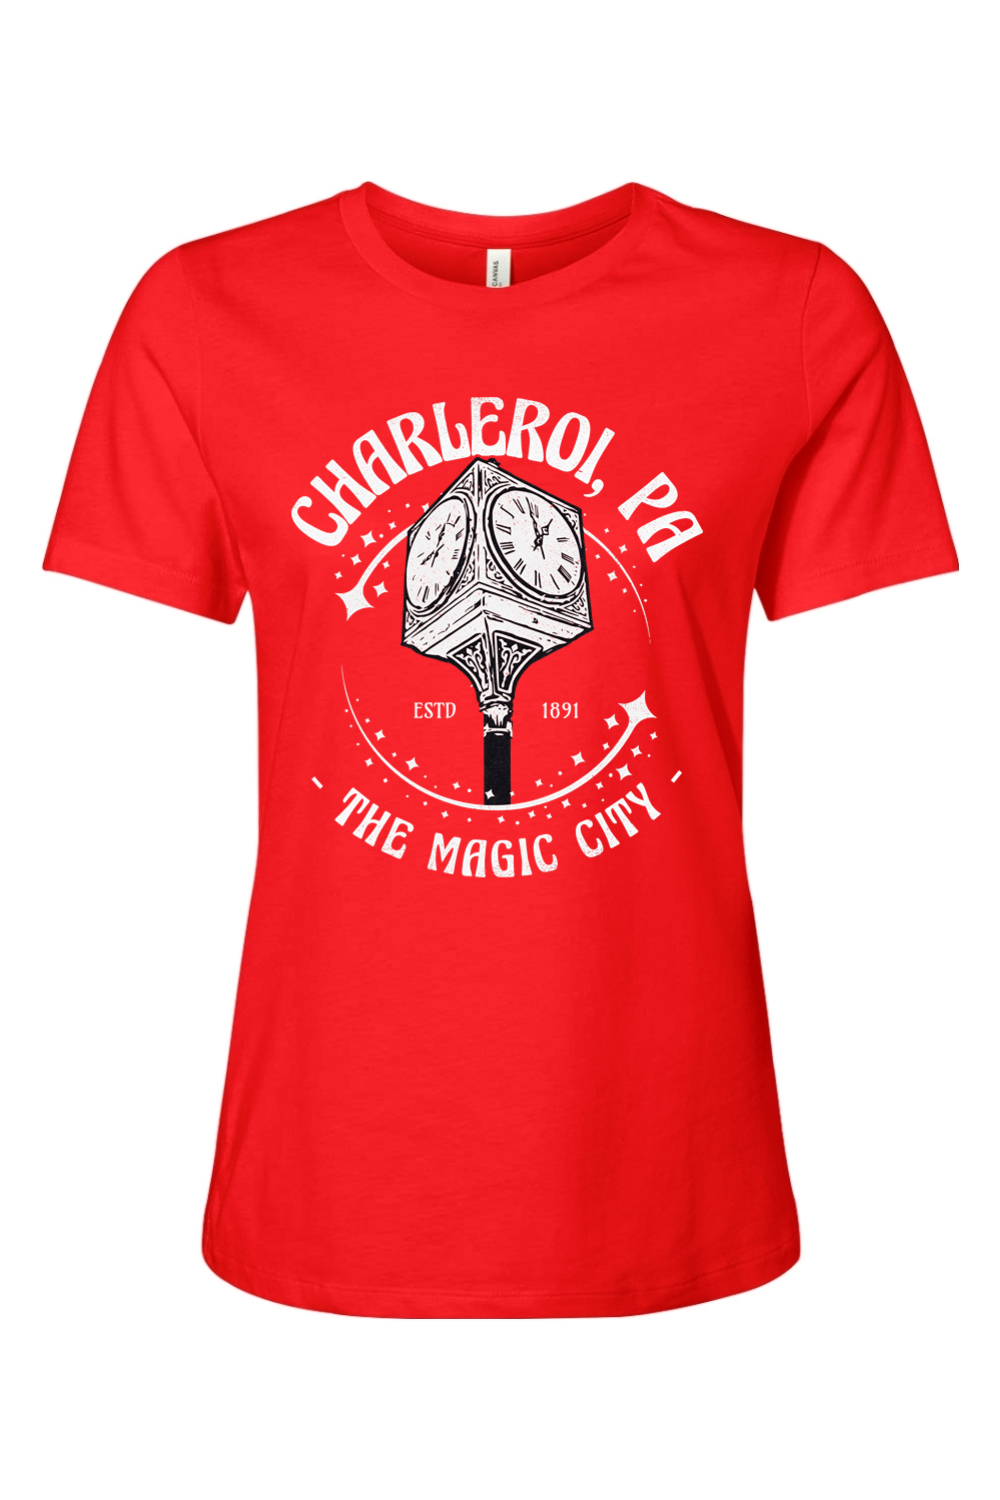 Charleroi, PA - the Magic City - Ladies Tee - Yinzylvania